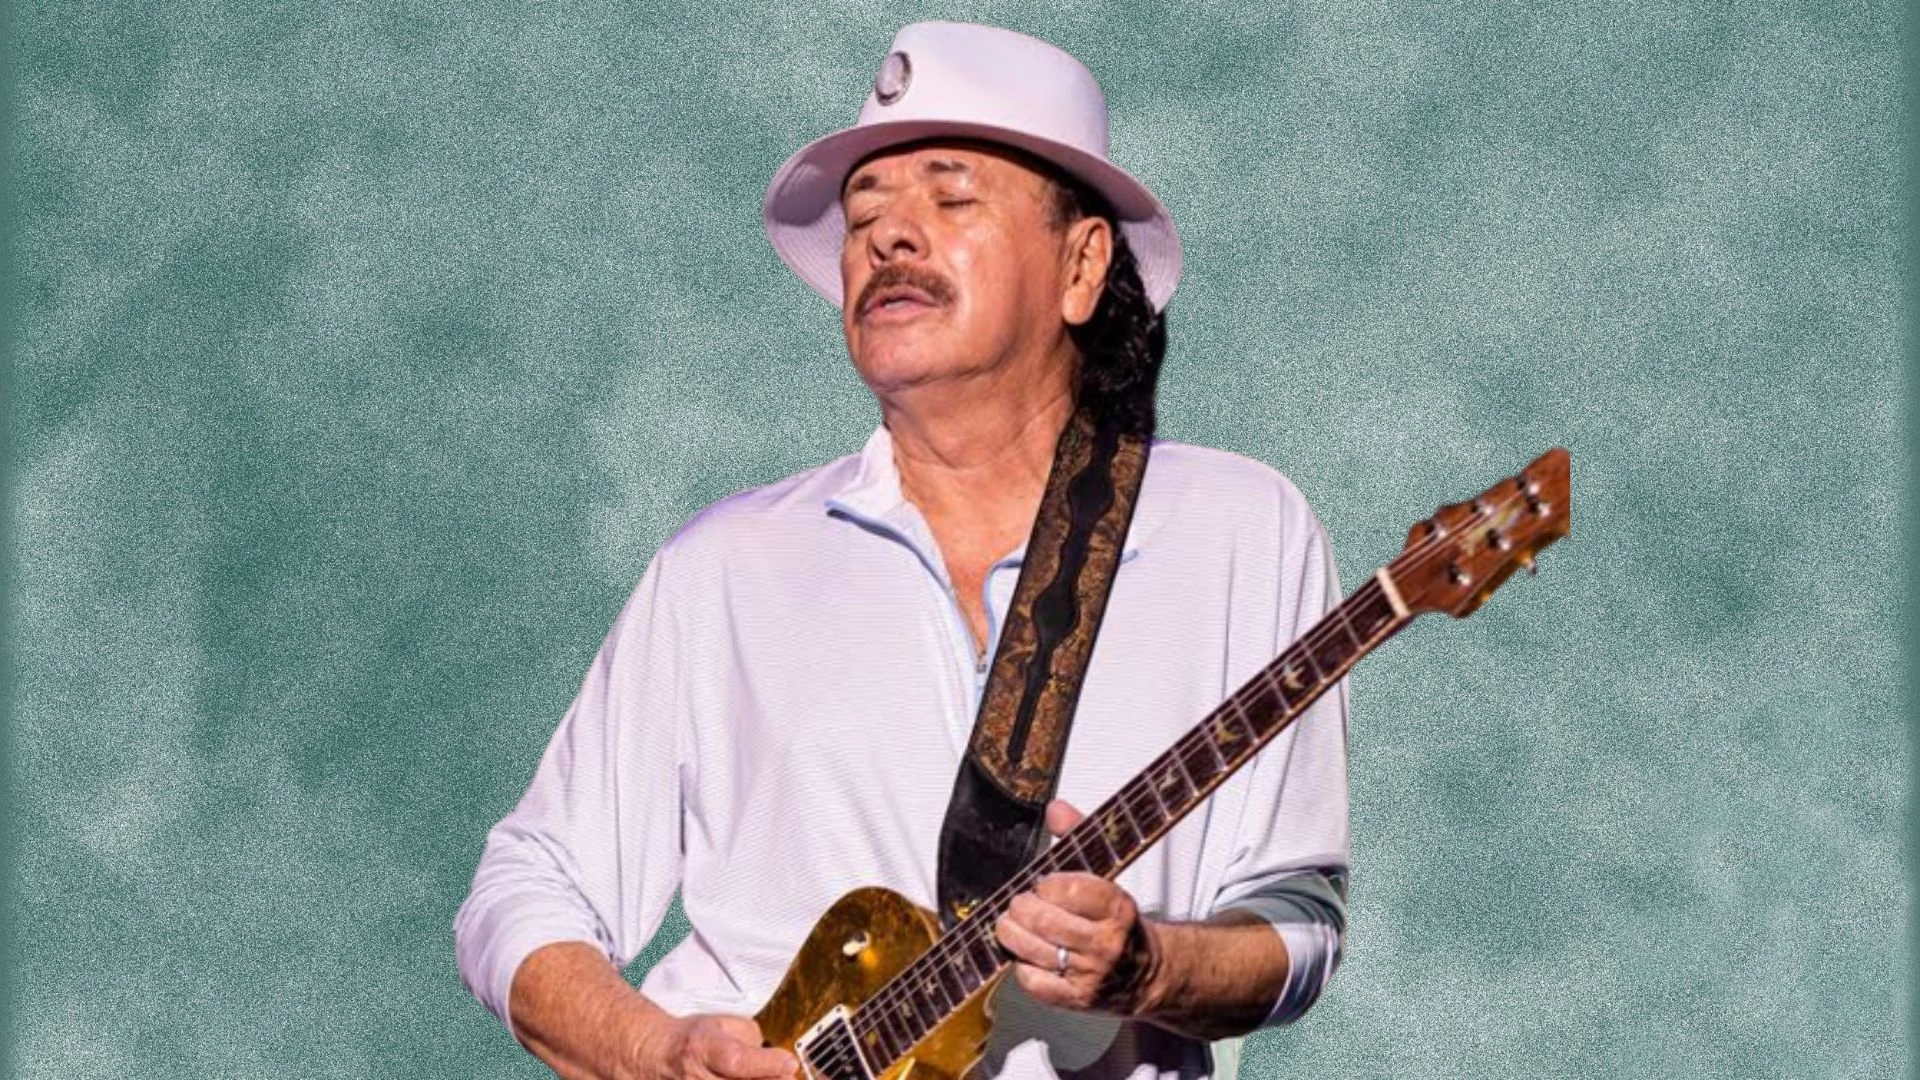 Carlos Santana Net Worth in 2023 How Rich is He Now?